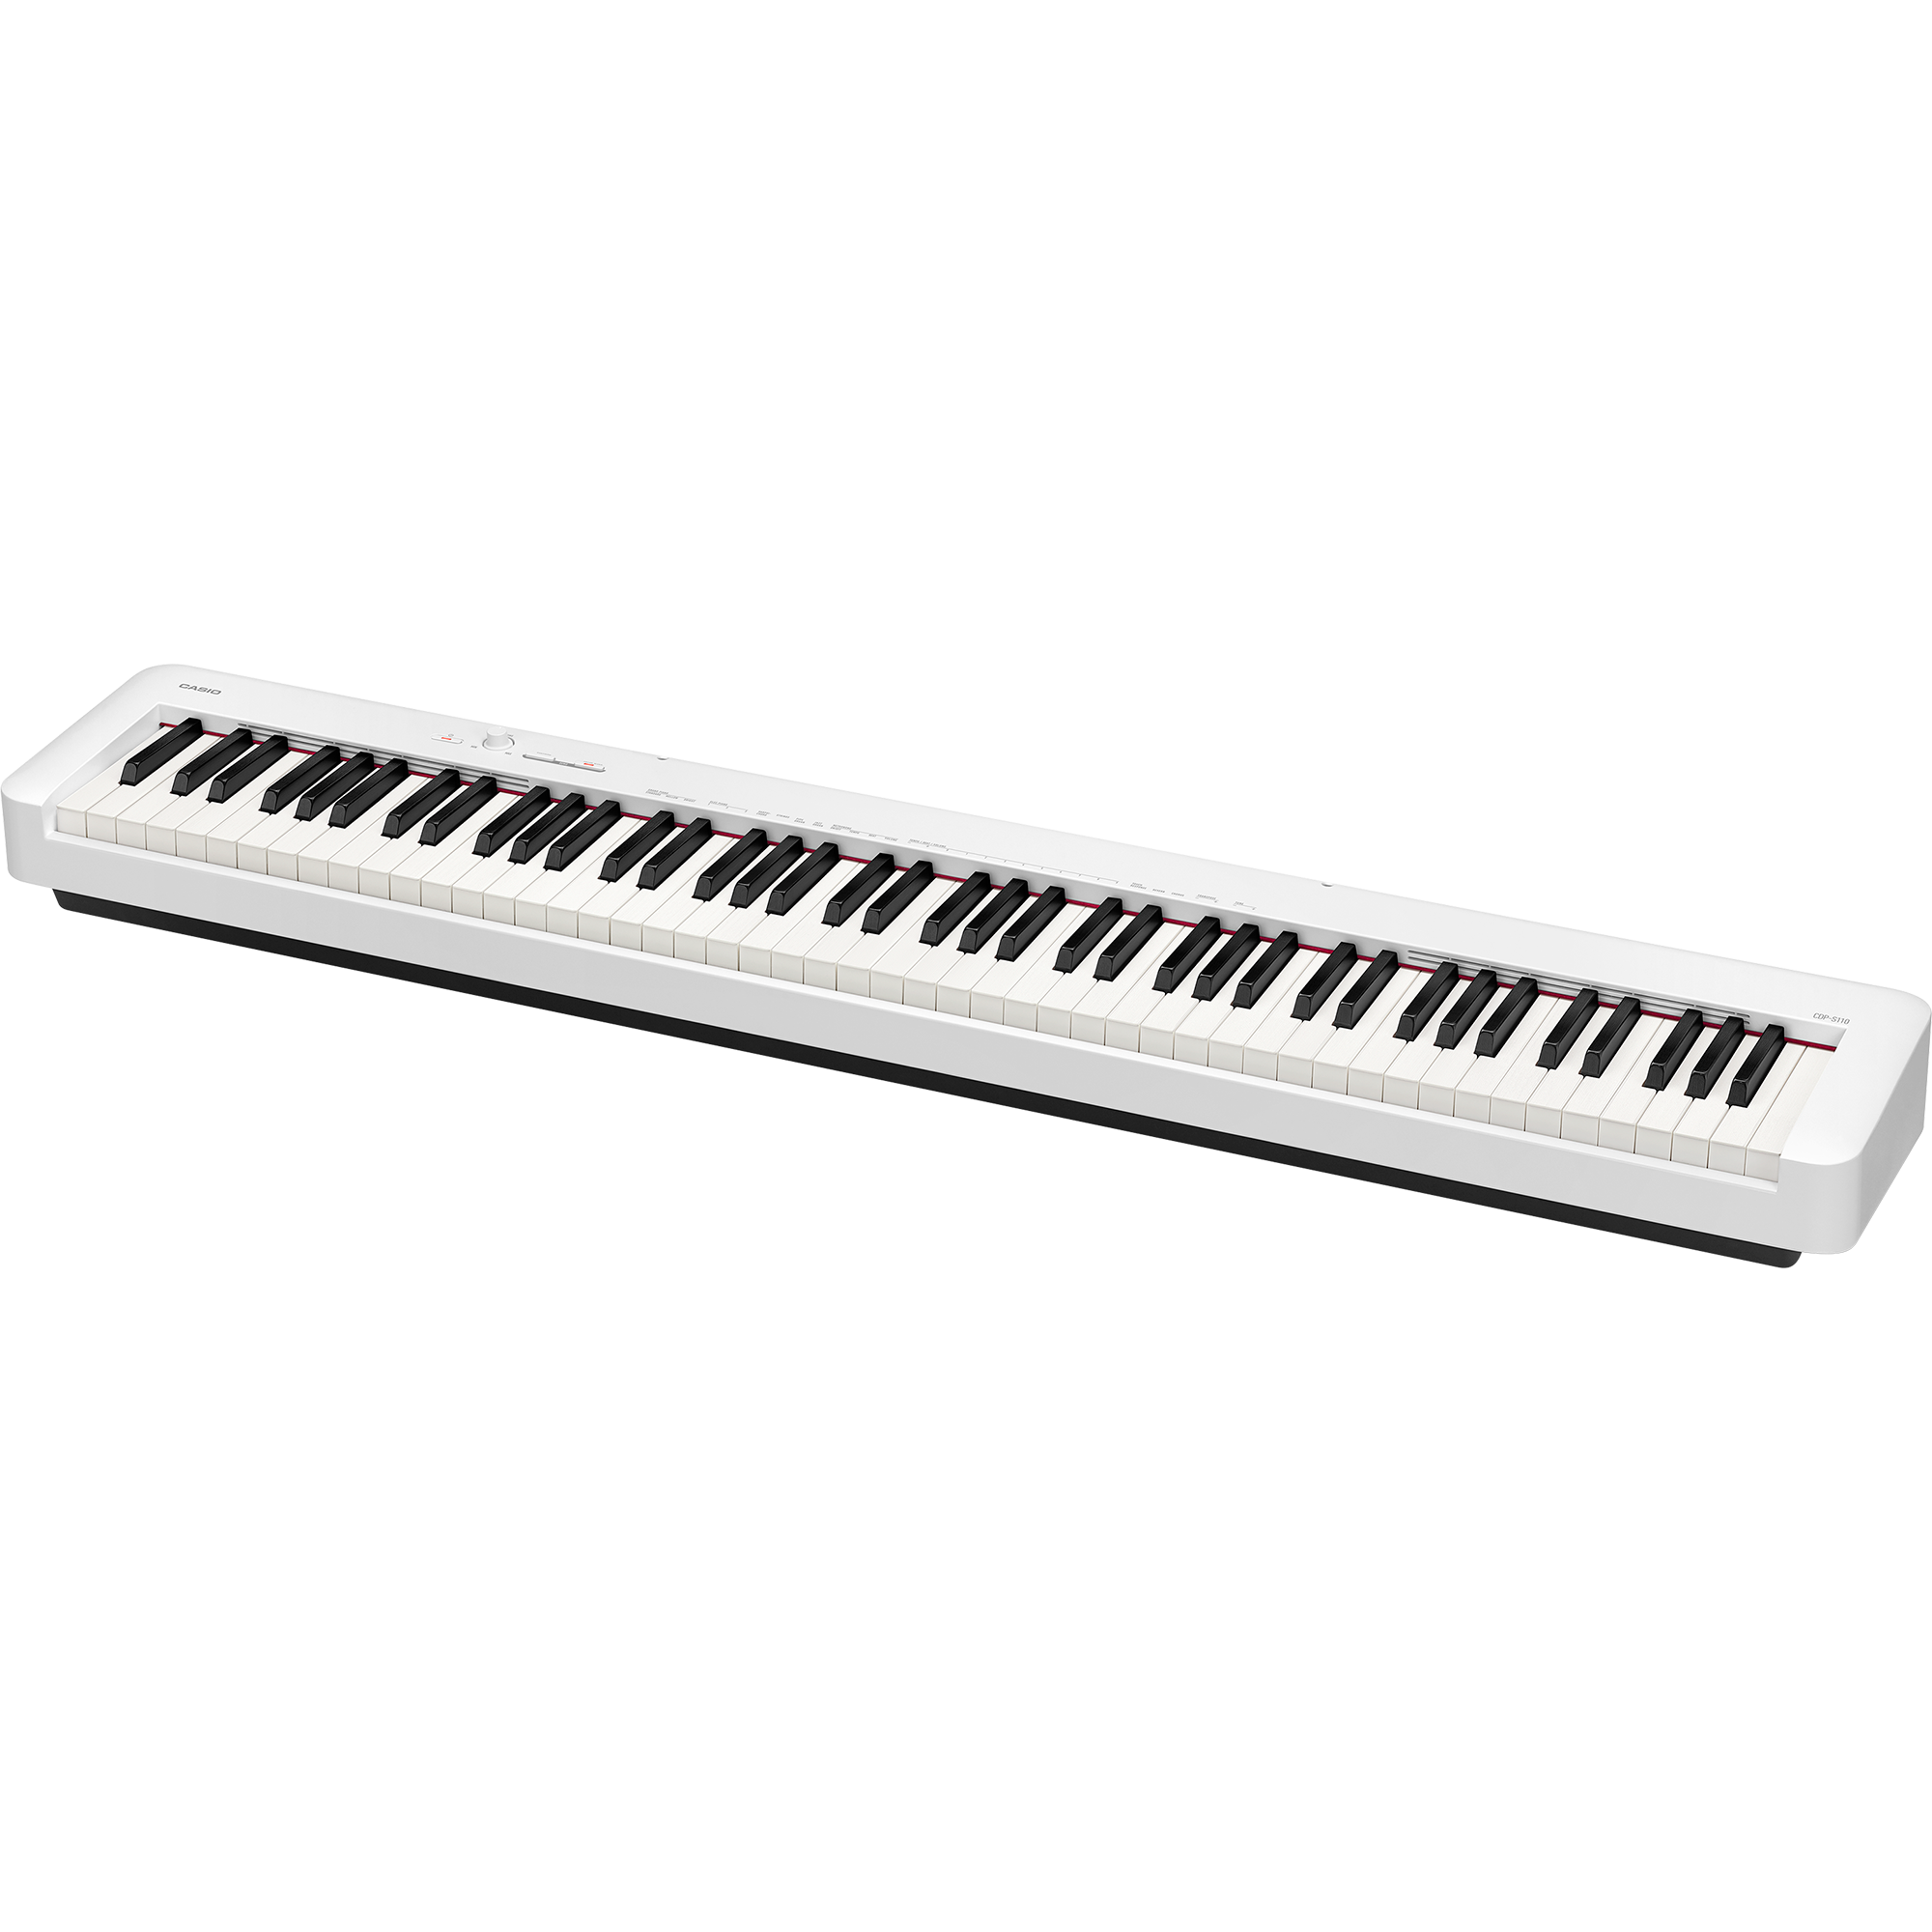 Piano Digital - CASIO CDP-S110